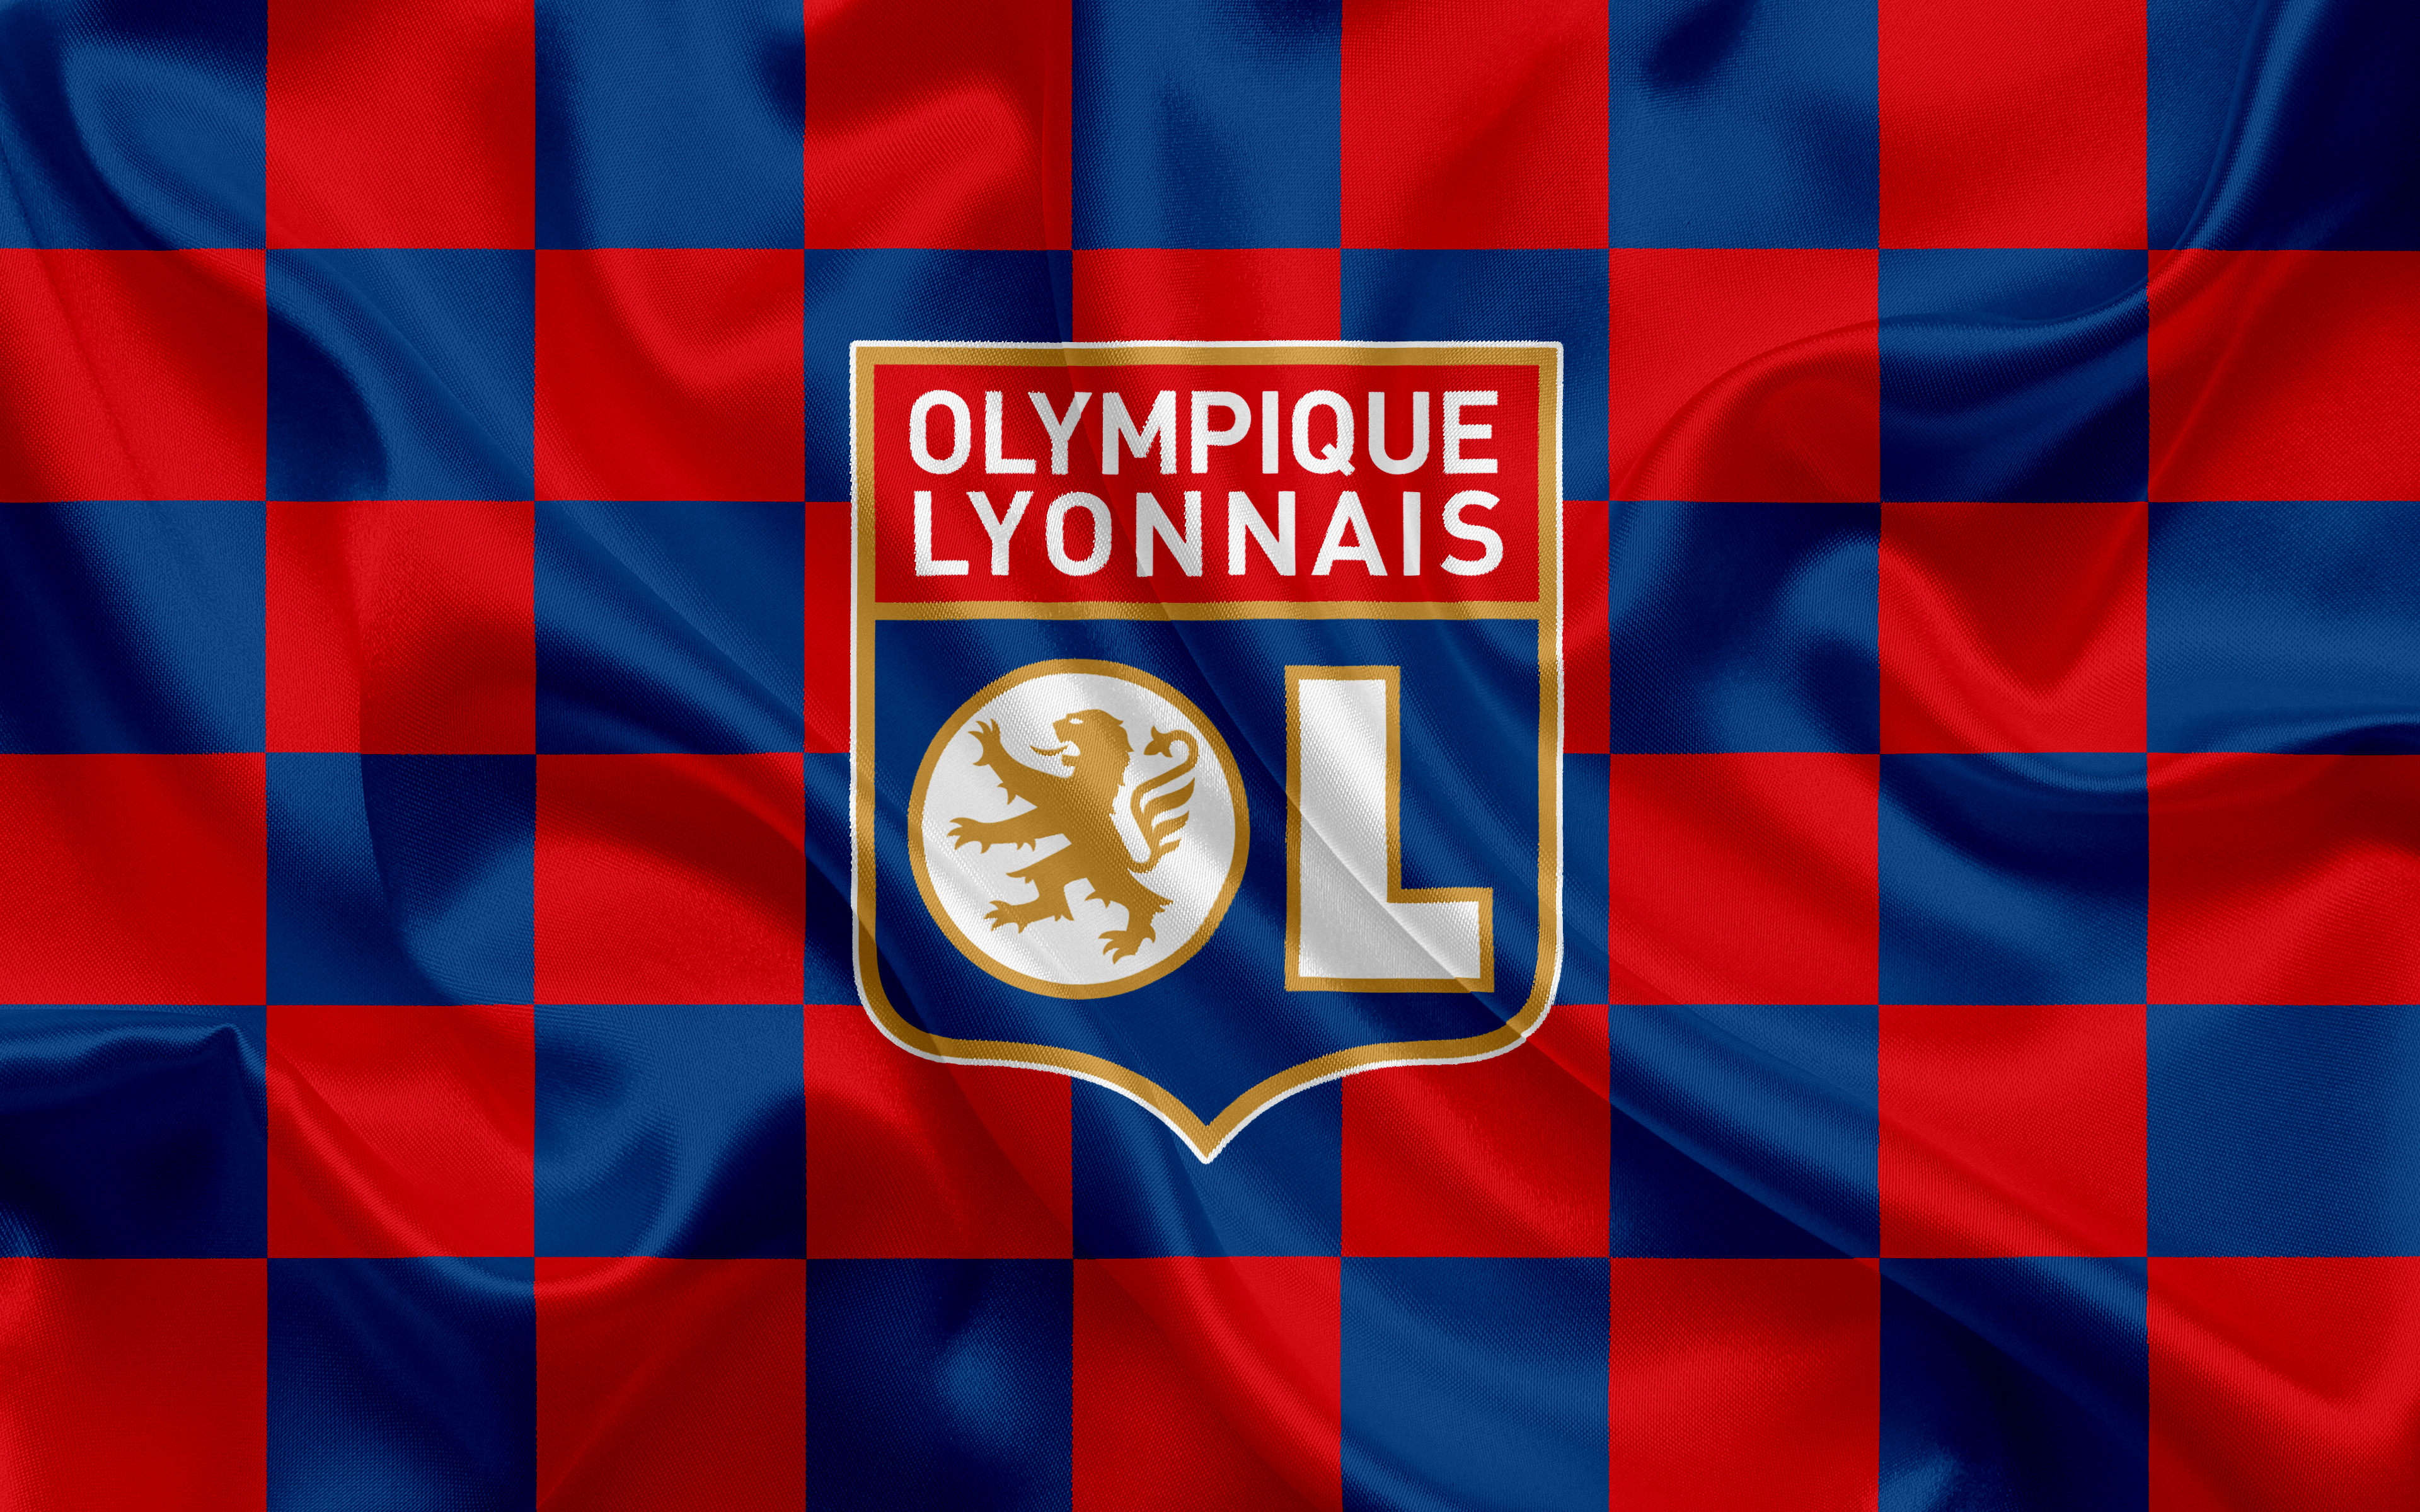 Olympique Lyonnais 4k Ultra HD Wallpaper Background Image